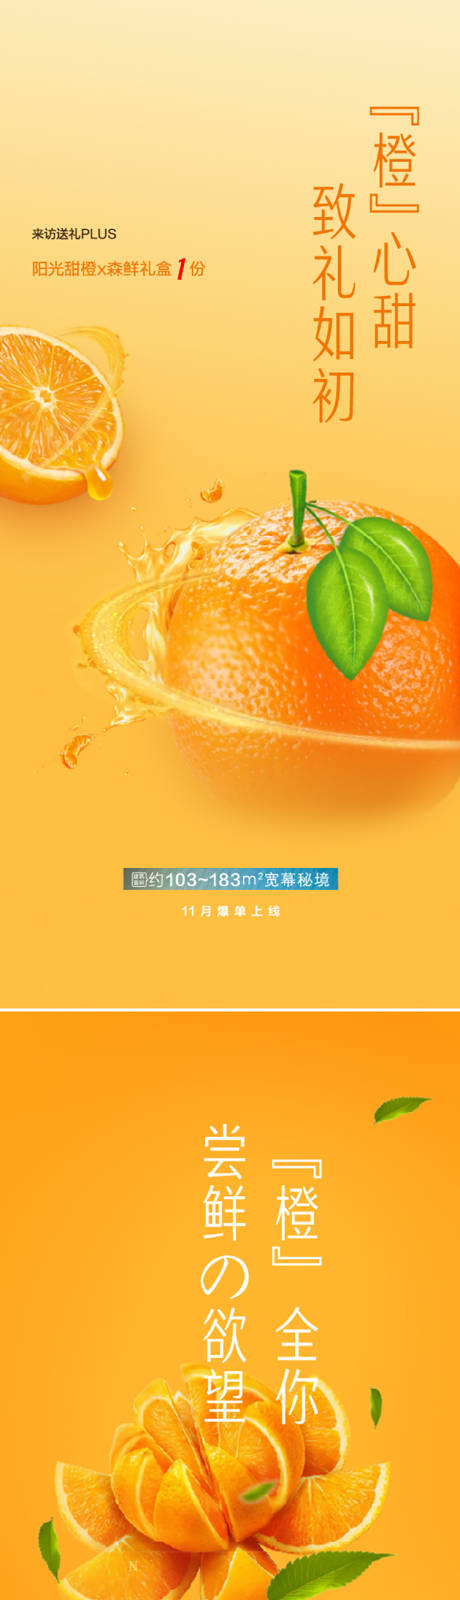 橙子-源文件